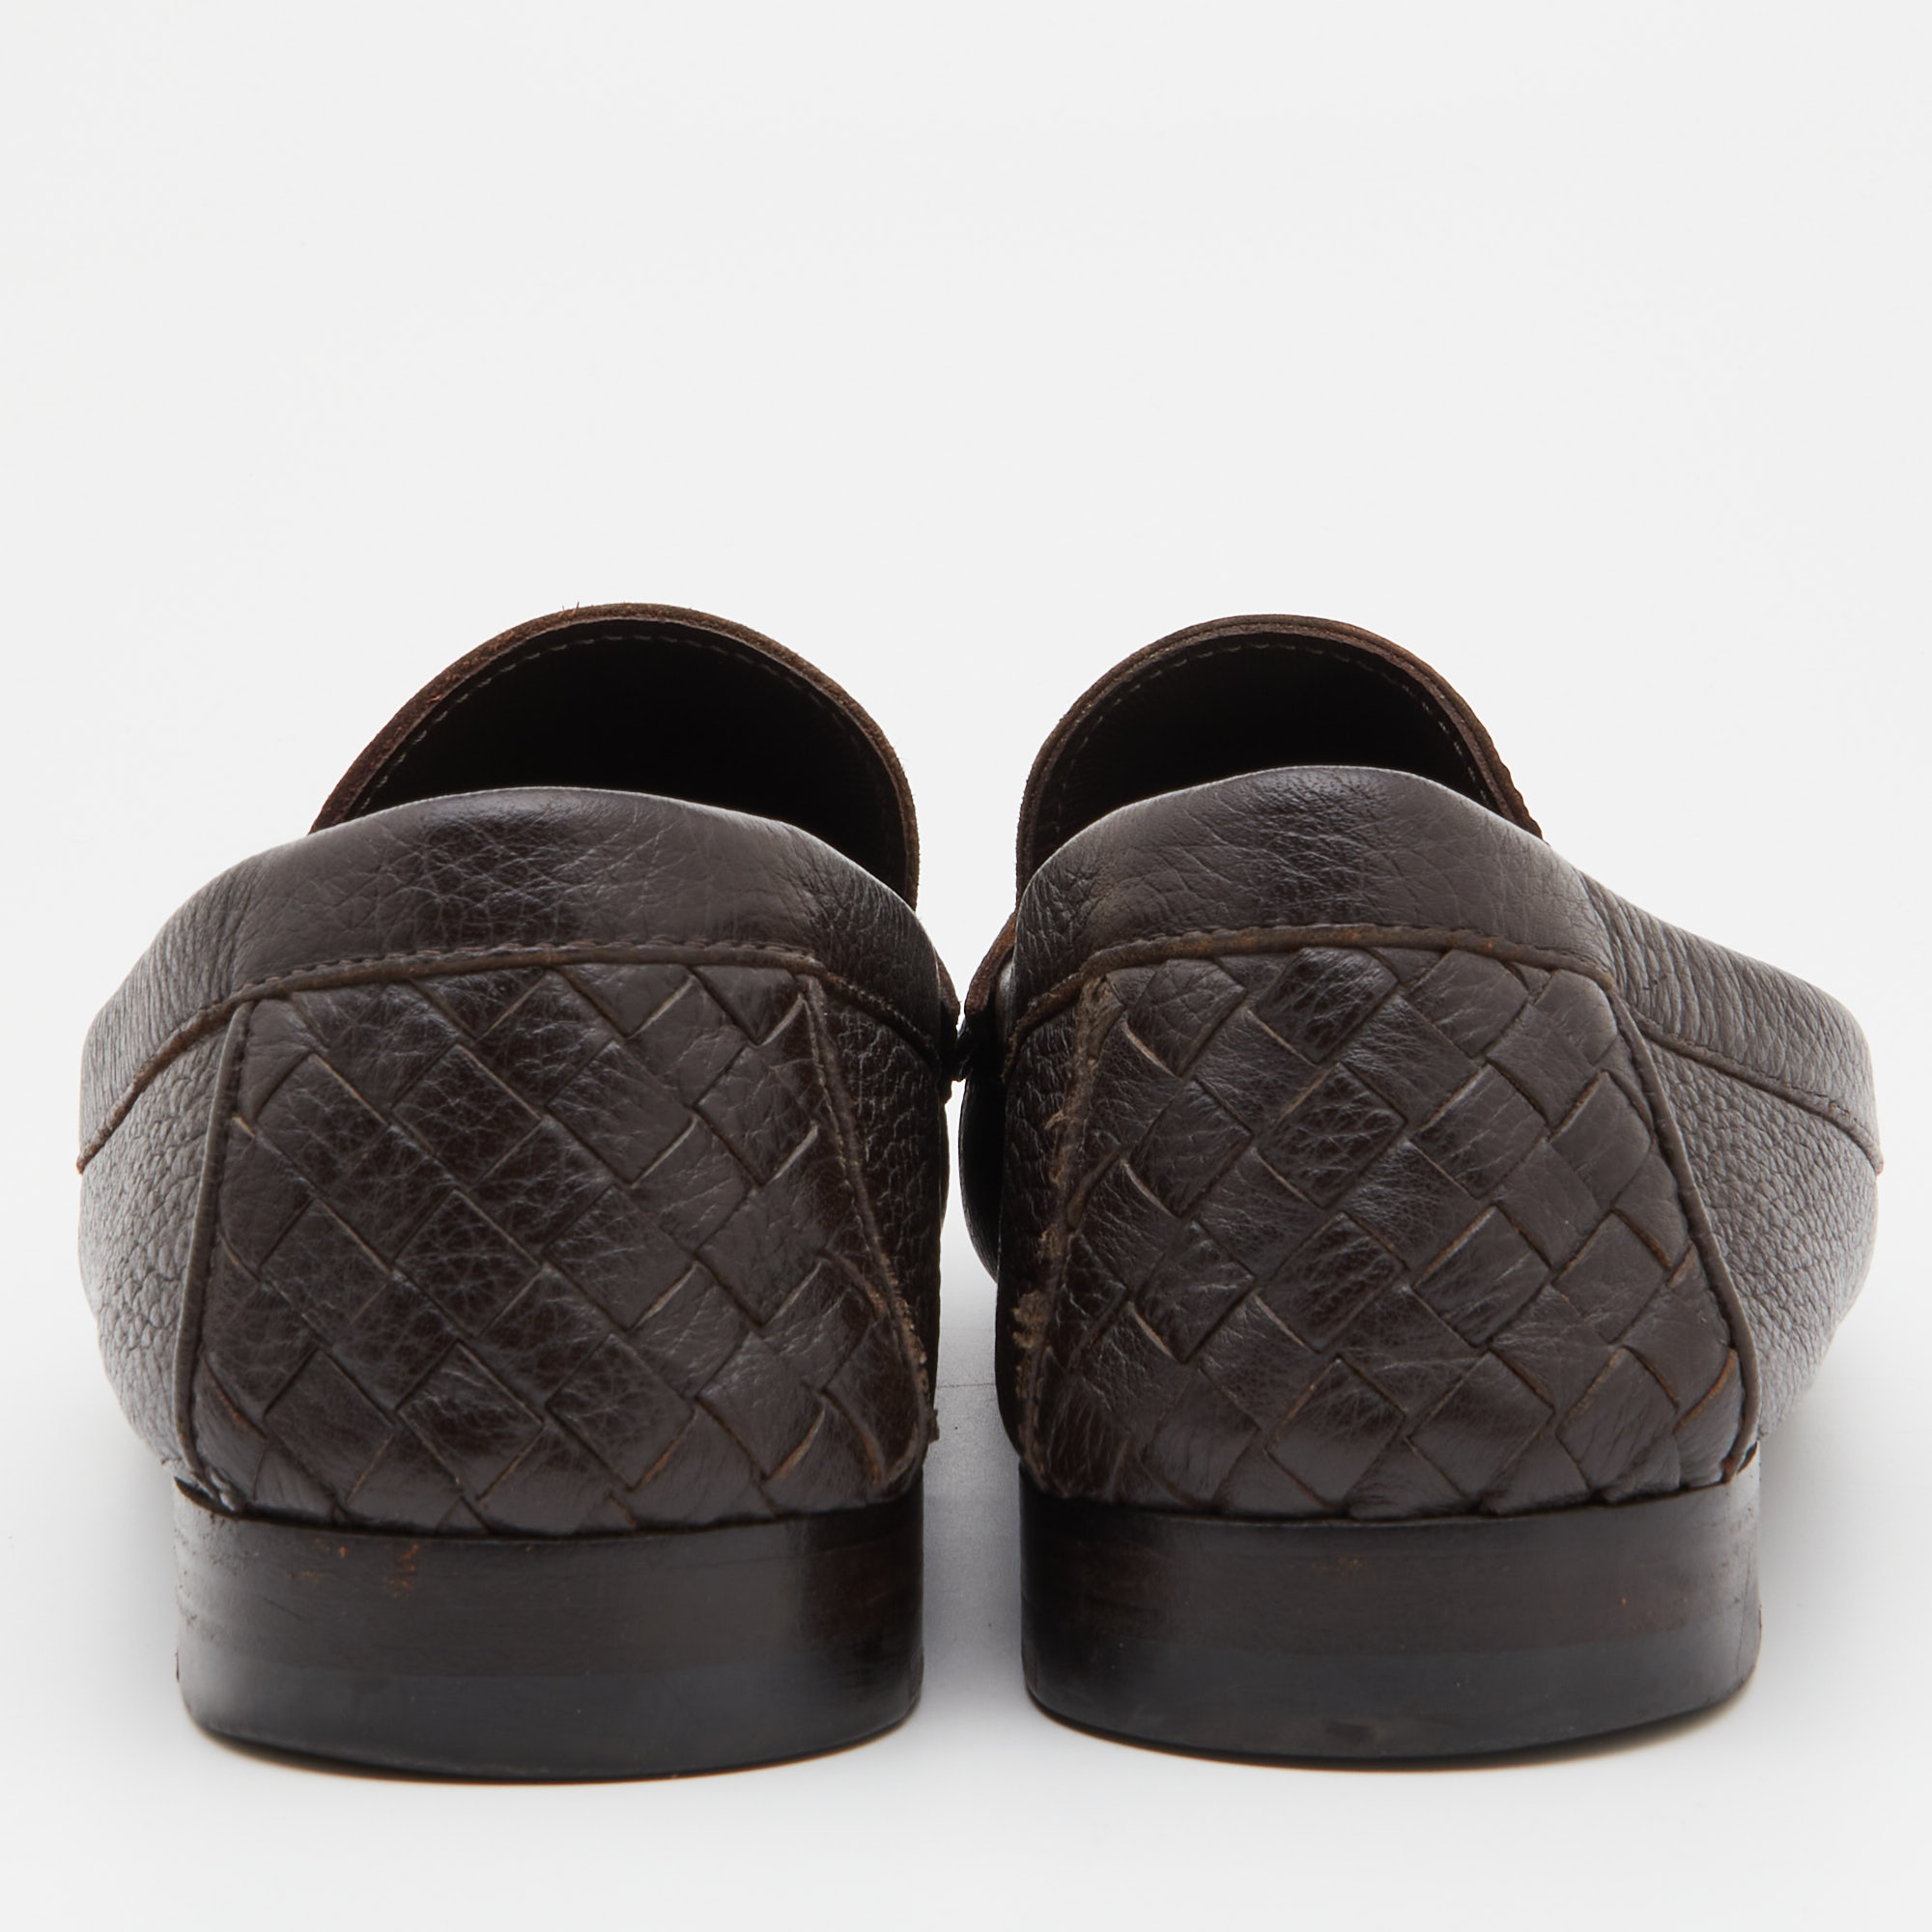 Bottega Veneta Dark Brown Leather Penny Slip On Loafers Size 42